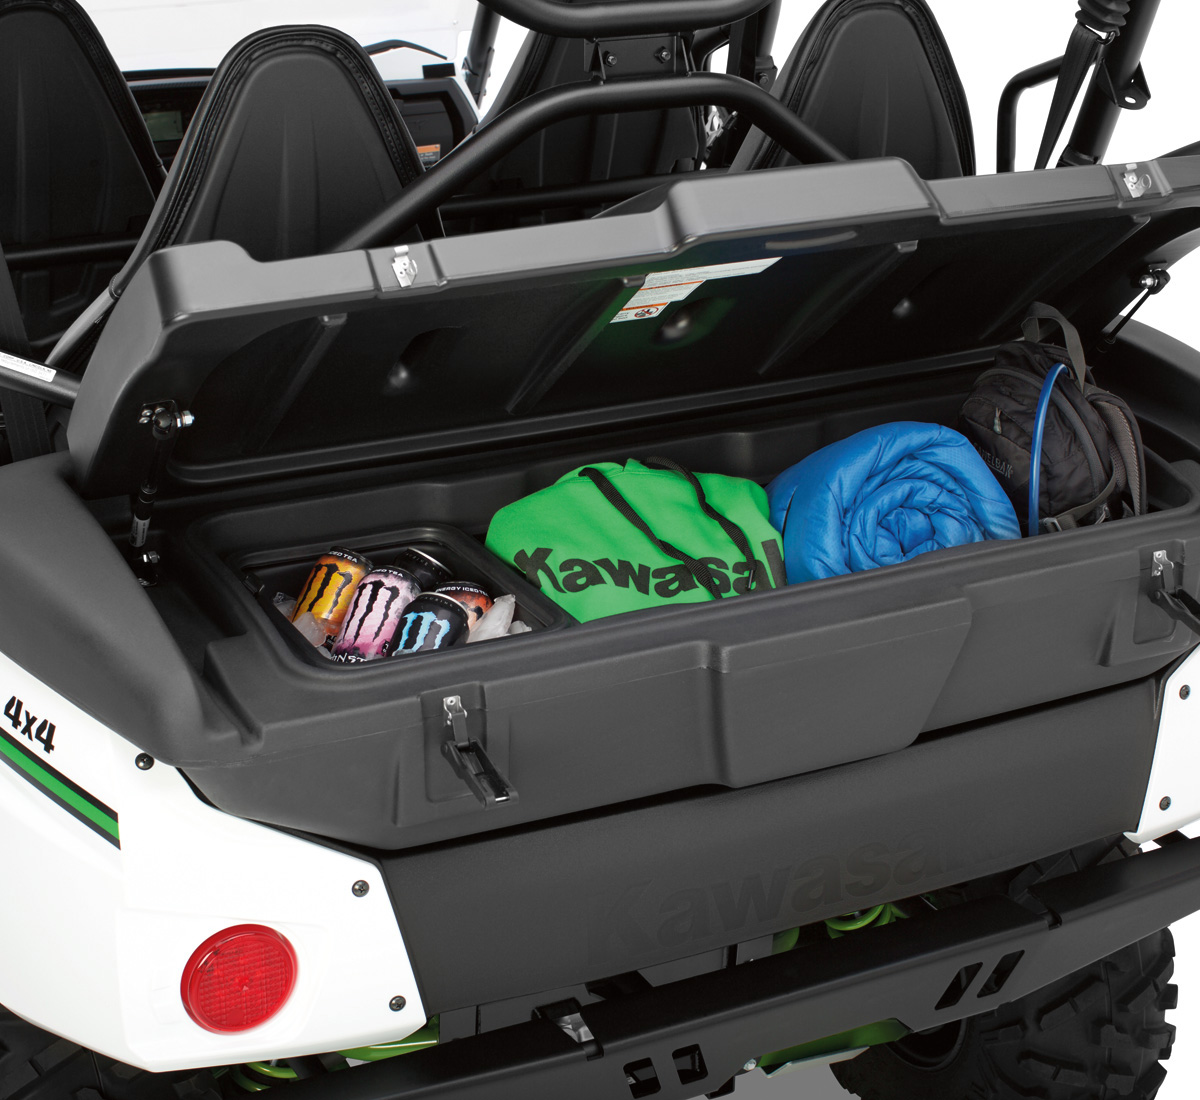 Teryx4™ S LE Cargo Box | Kawasaki Motors Corp., U.S.A.